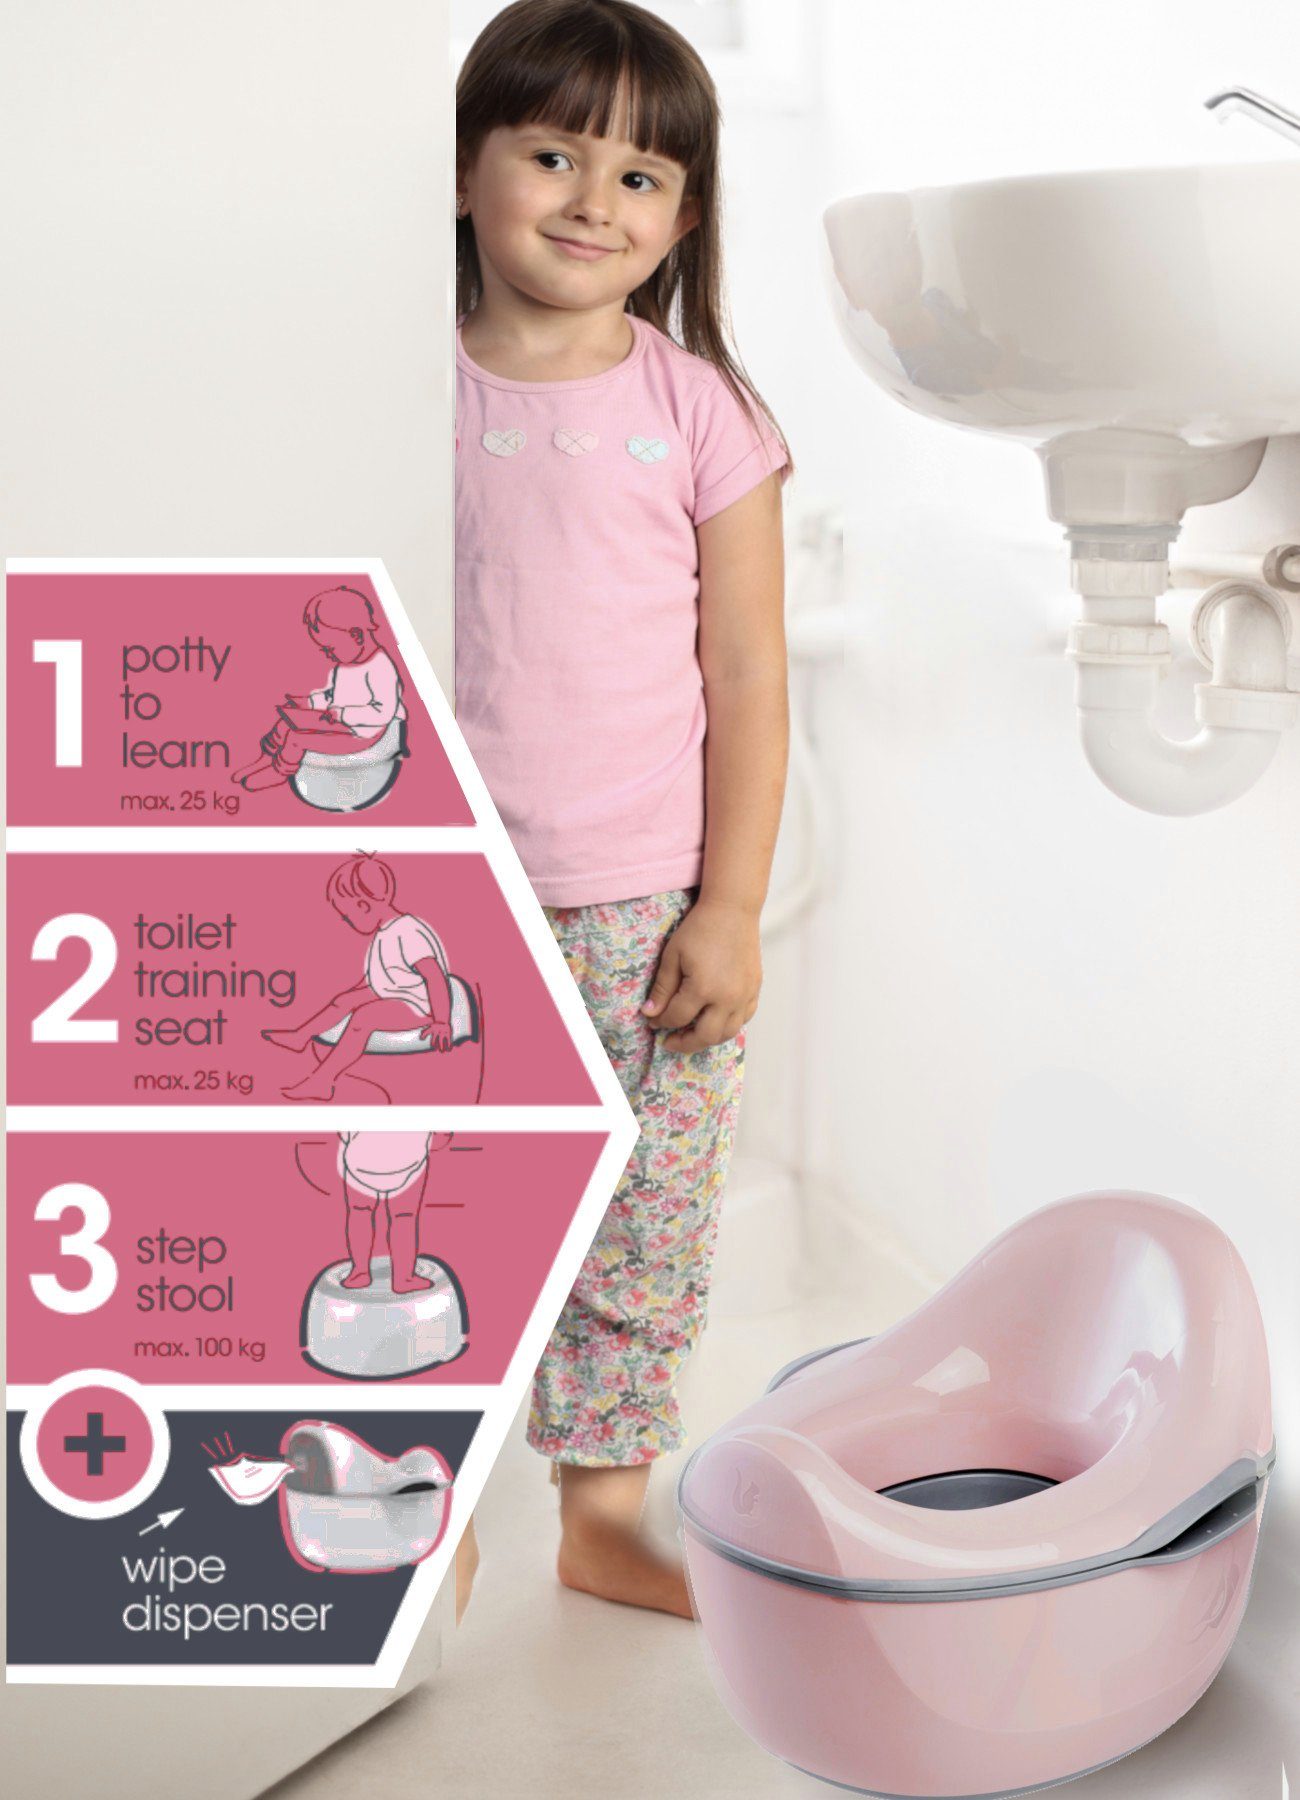 keeeper Toilettentrainer kasimir schützt - Europe, 4in1, deluxe Wald weltweit Made nordic FSC® babytopf in - pink